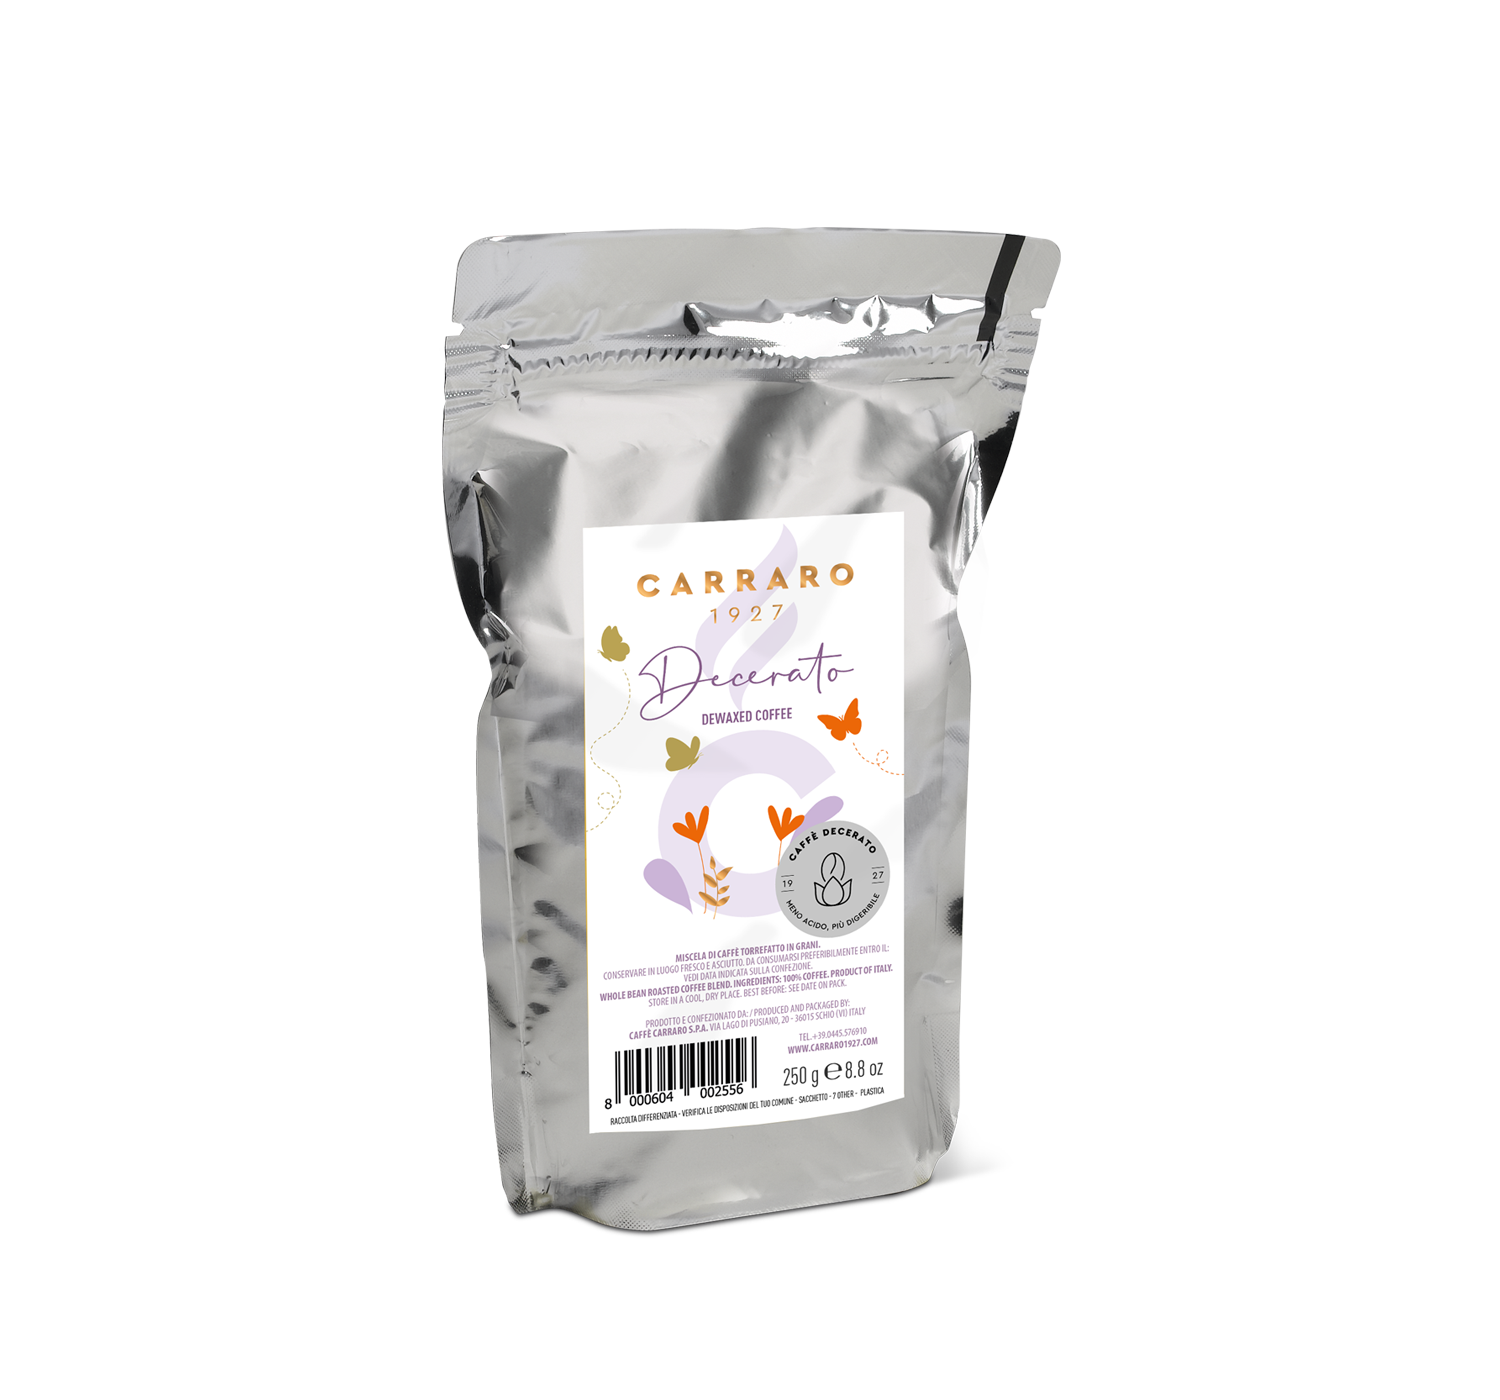 Decerato - Decerato – coffee beans 250 g standpack - Shop online Caffè Carraro